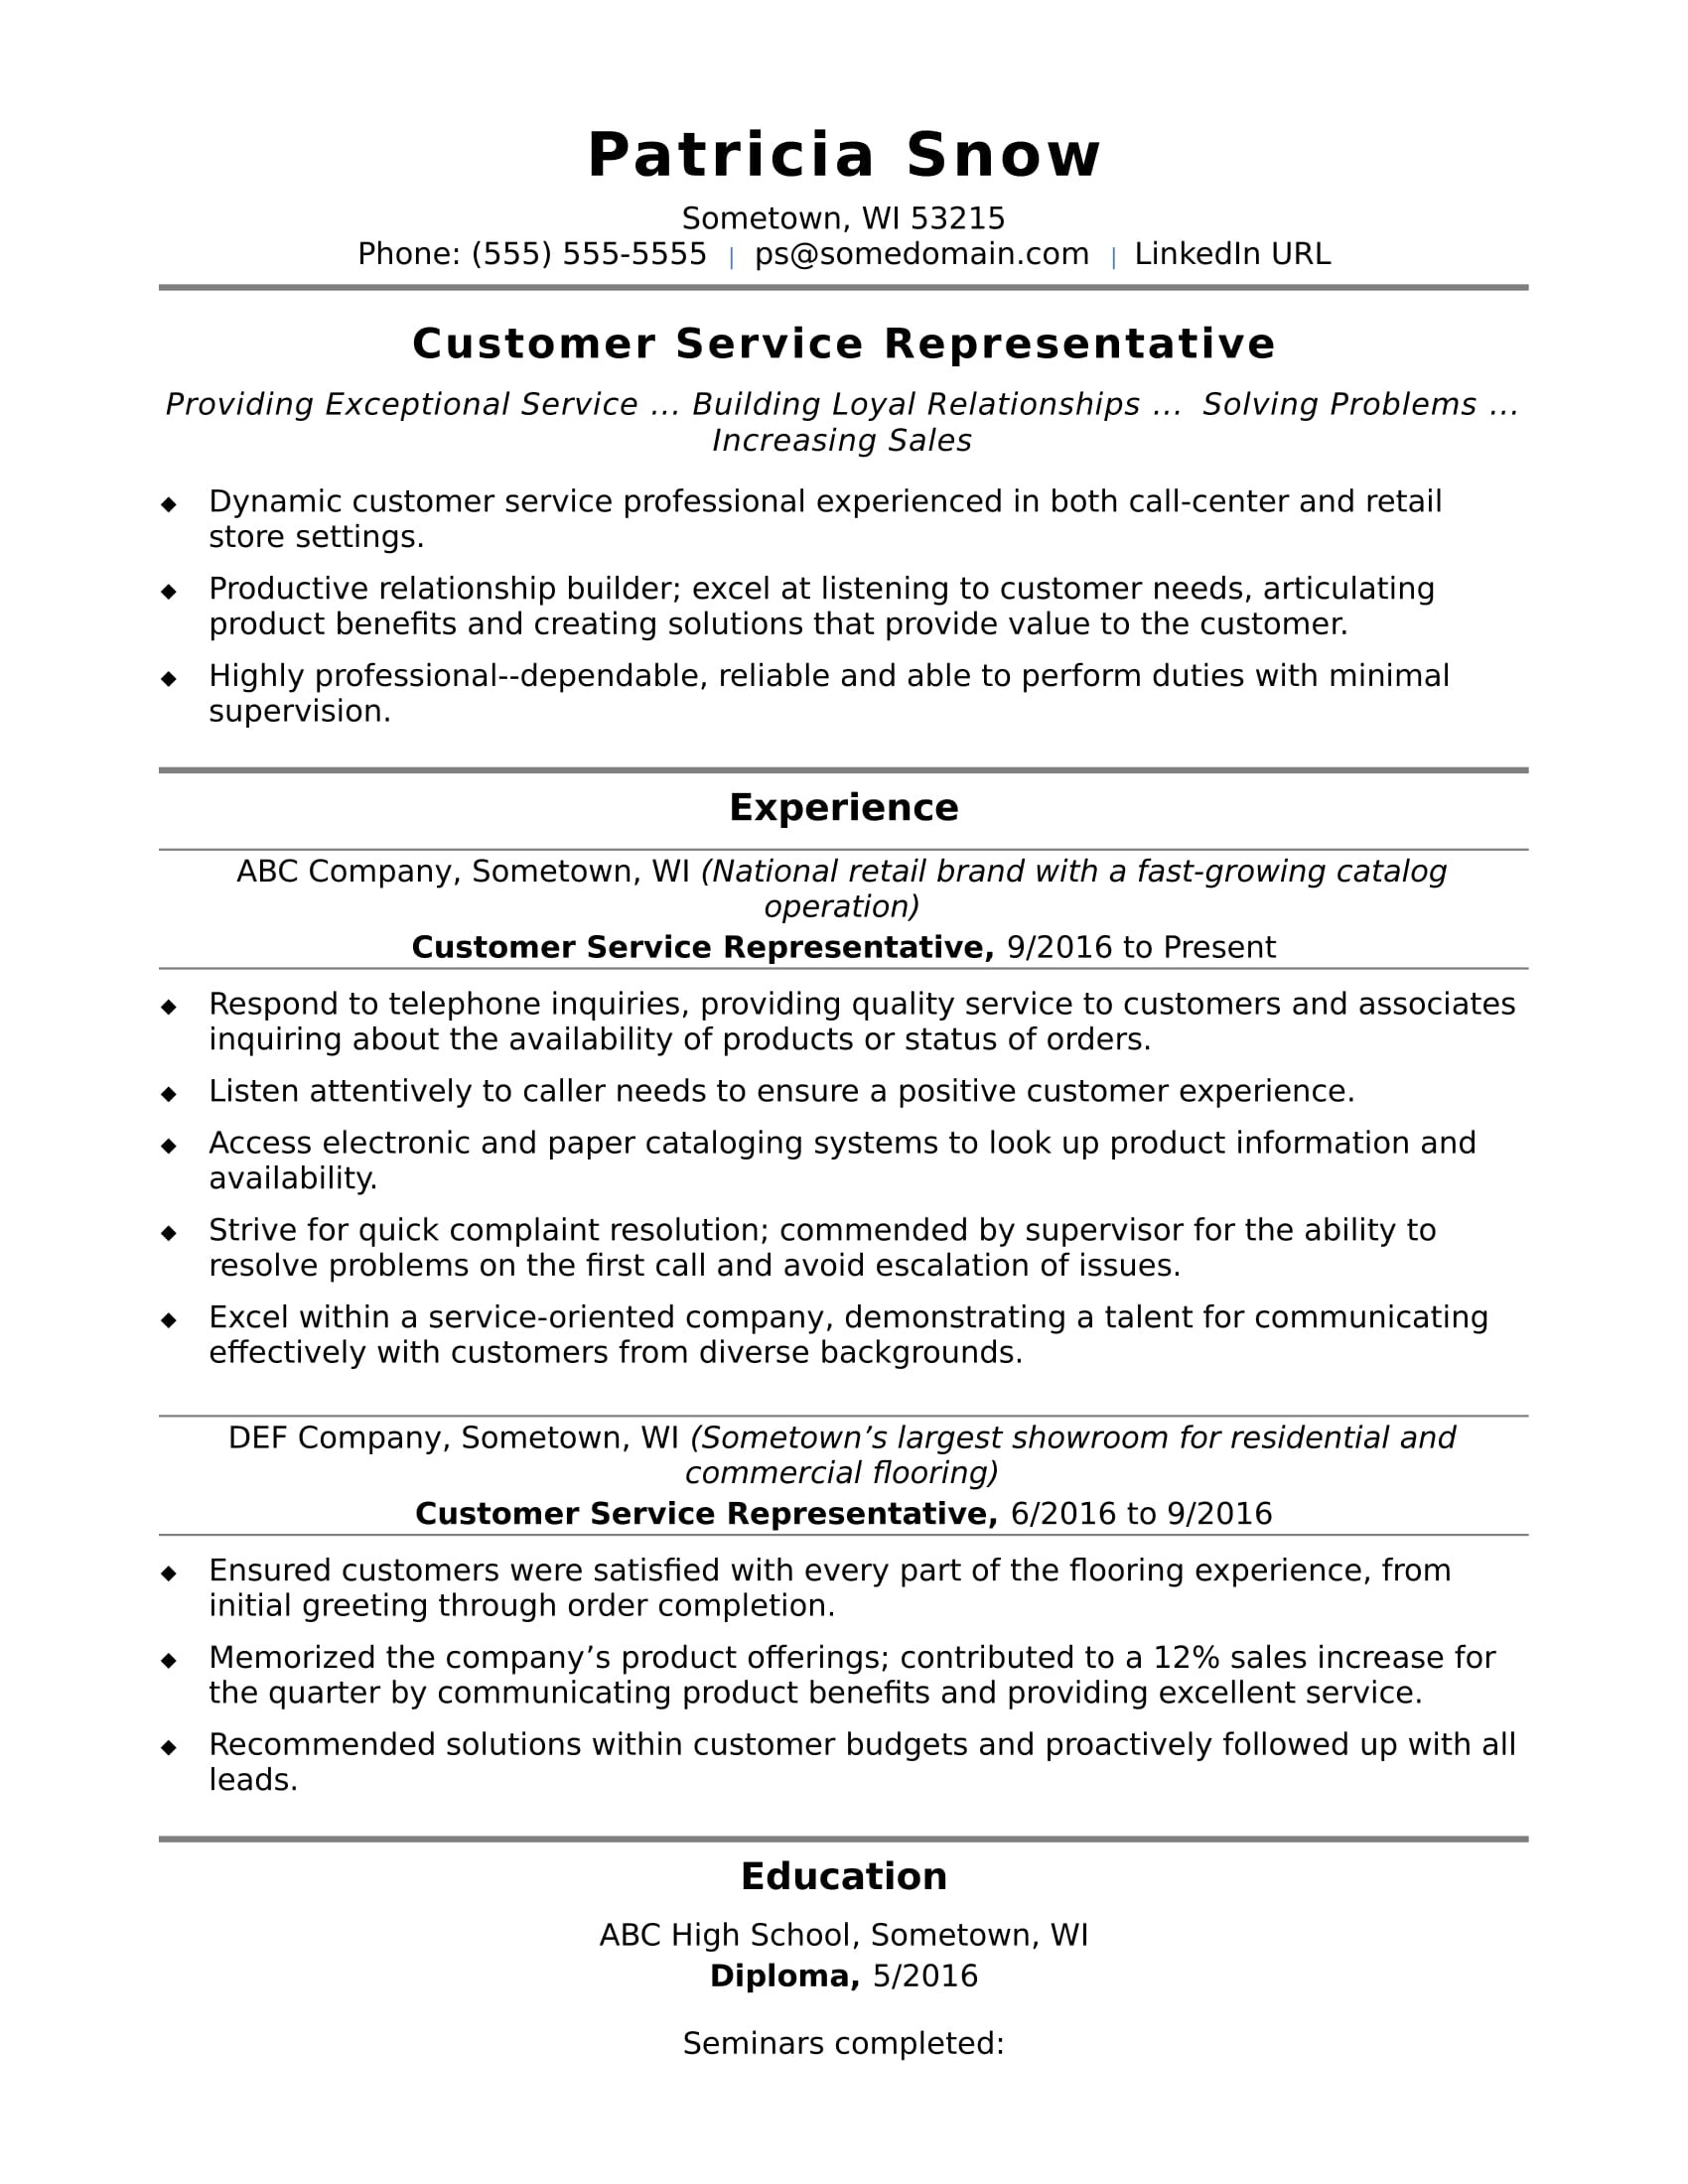 Resume for Entry Level Sample Tempklates Entry-level Customer Service Resume Sample Monster.com